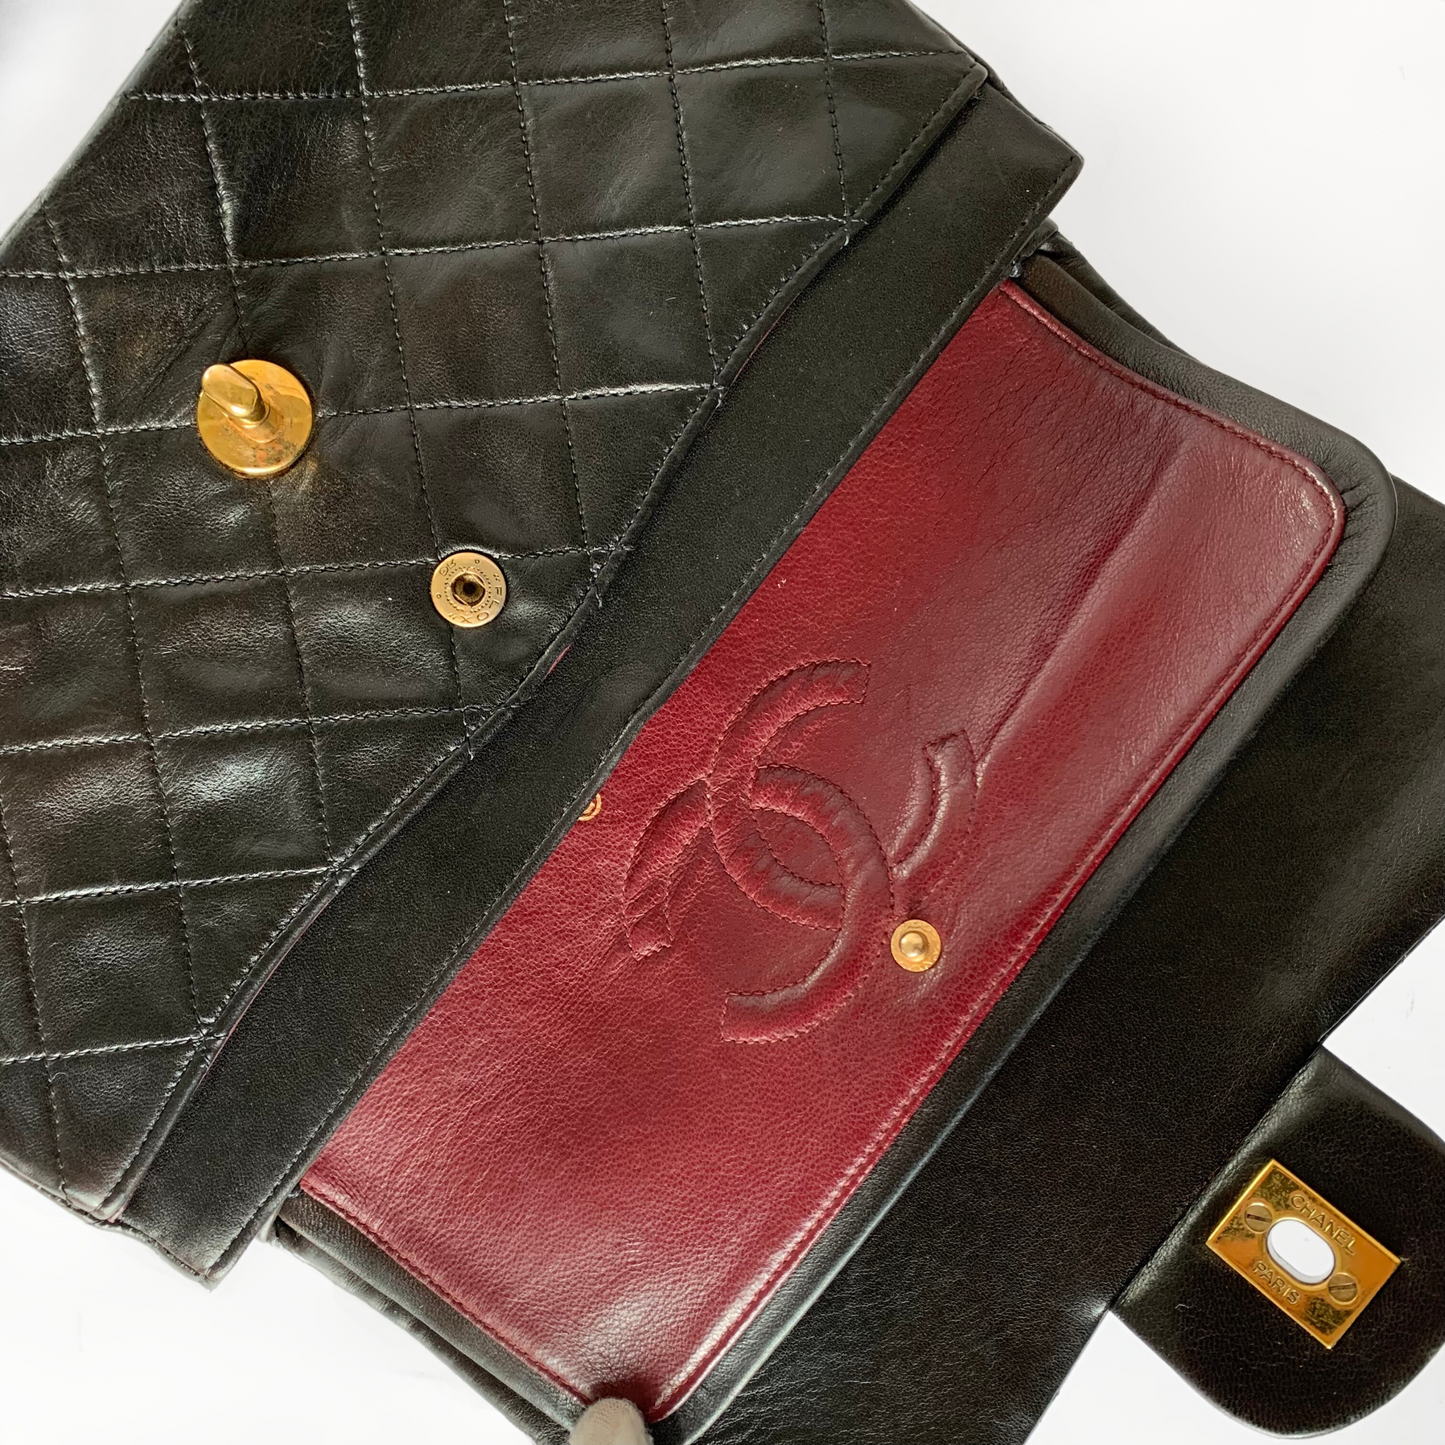 Chanel Chanel Classic Double Flap Small Lambskin Leather - Handbags - Etoile Luxury Vintage